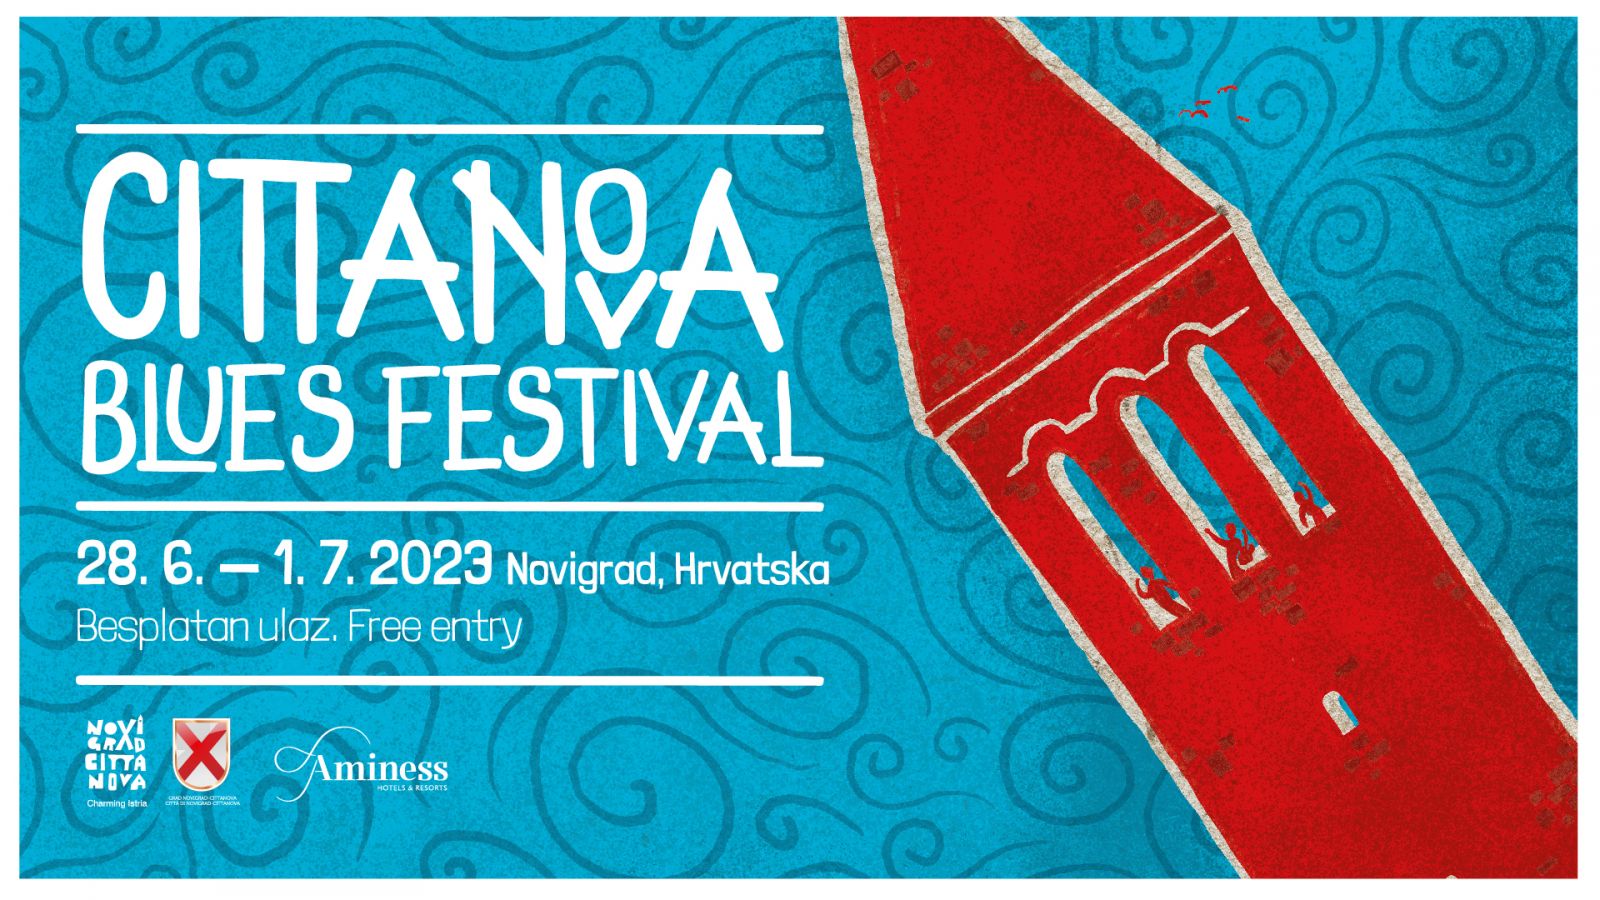 Velika imena bluesa dolaze na Cittanova Blues Festival u Novigrad!